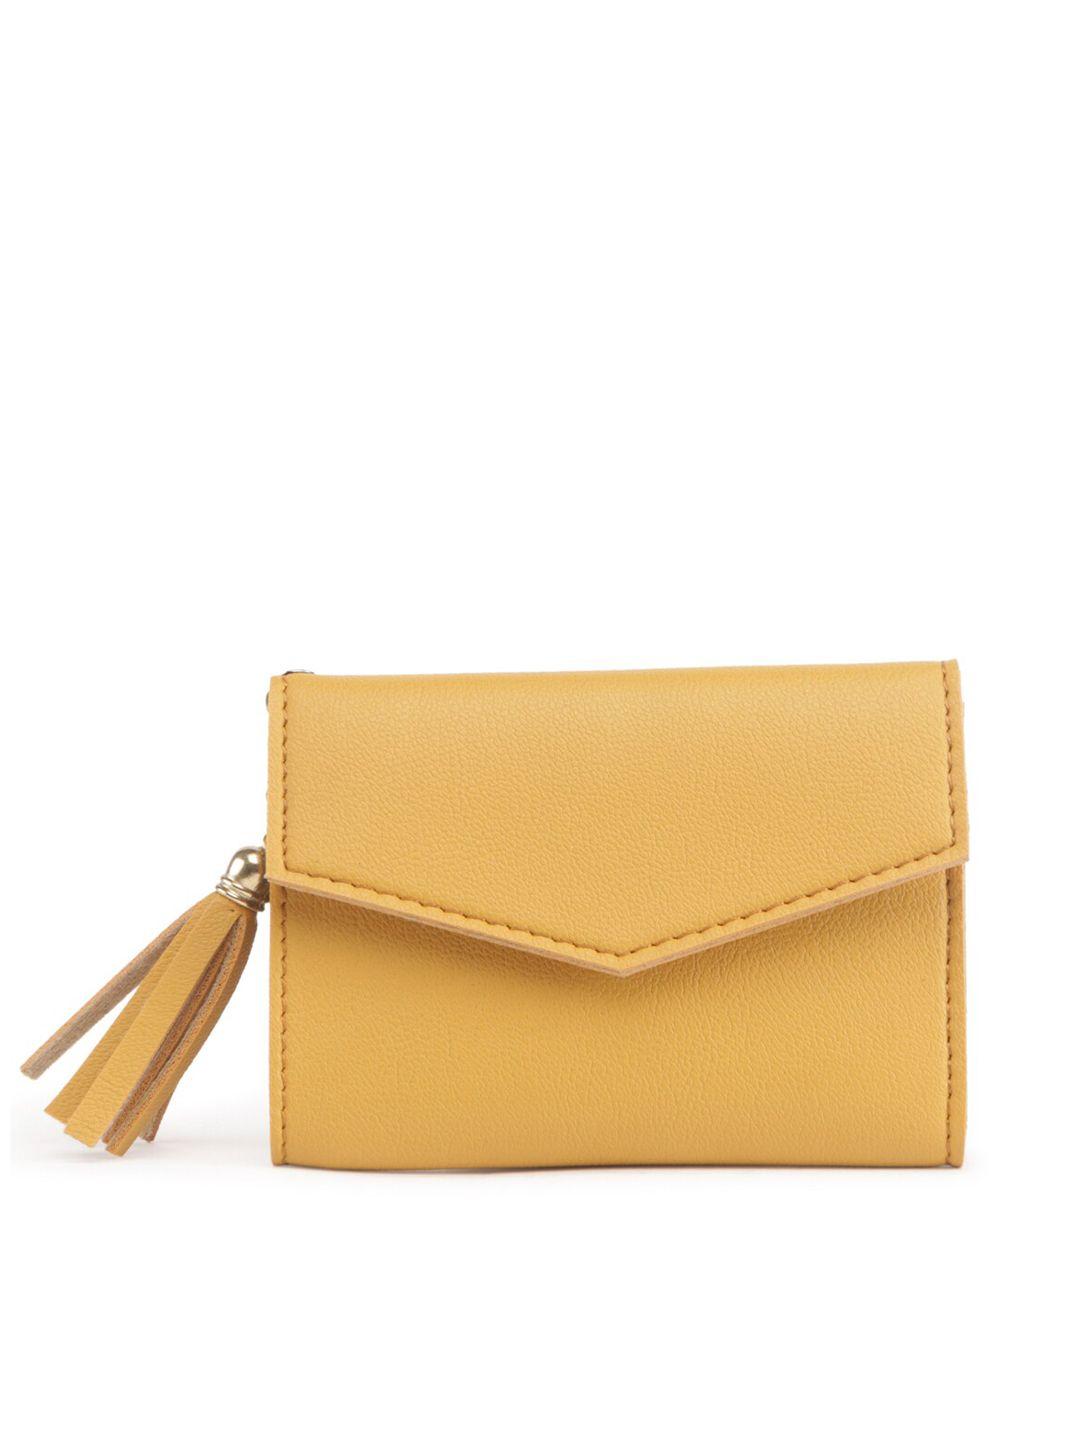 imars women yellow textured envelope wallet